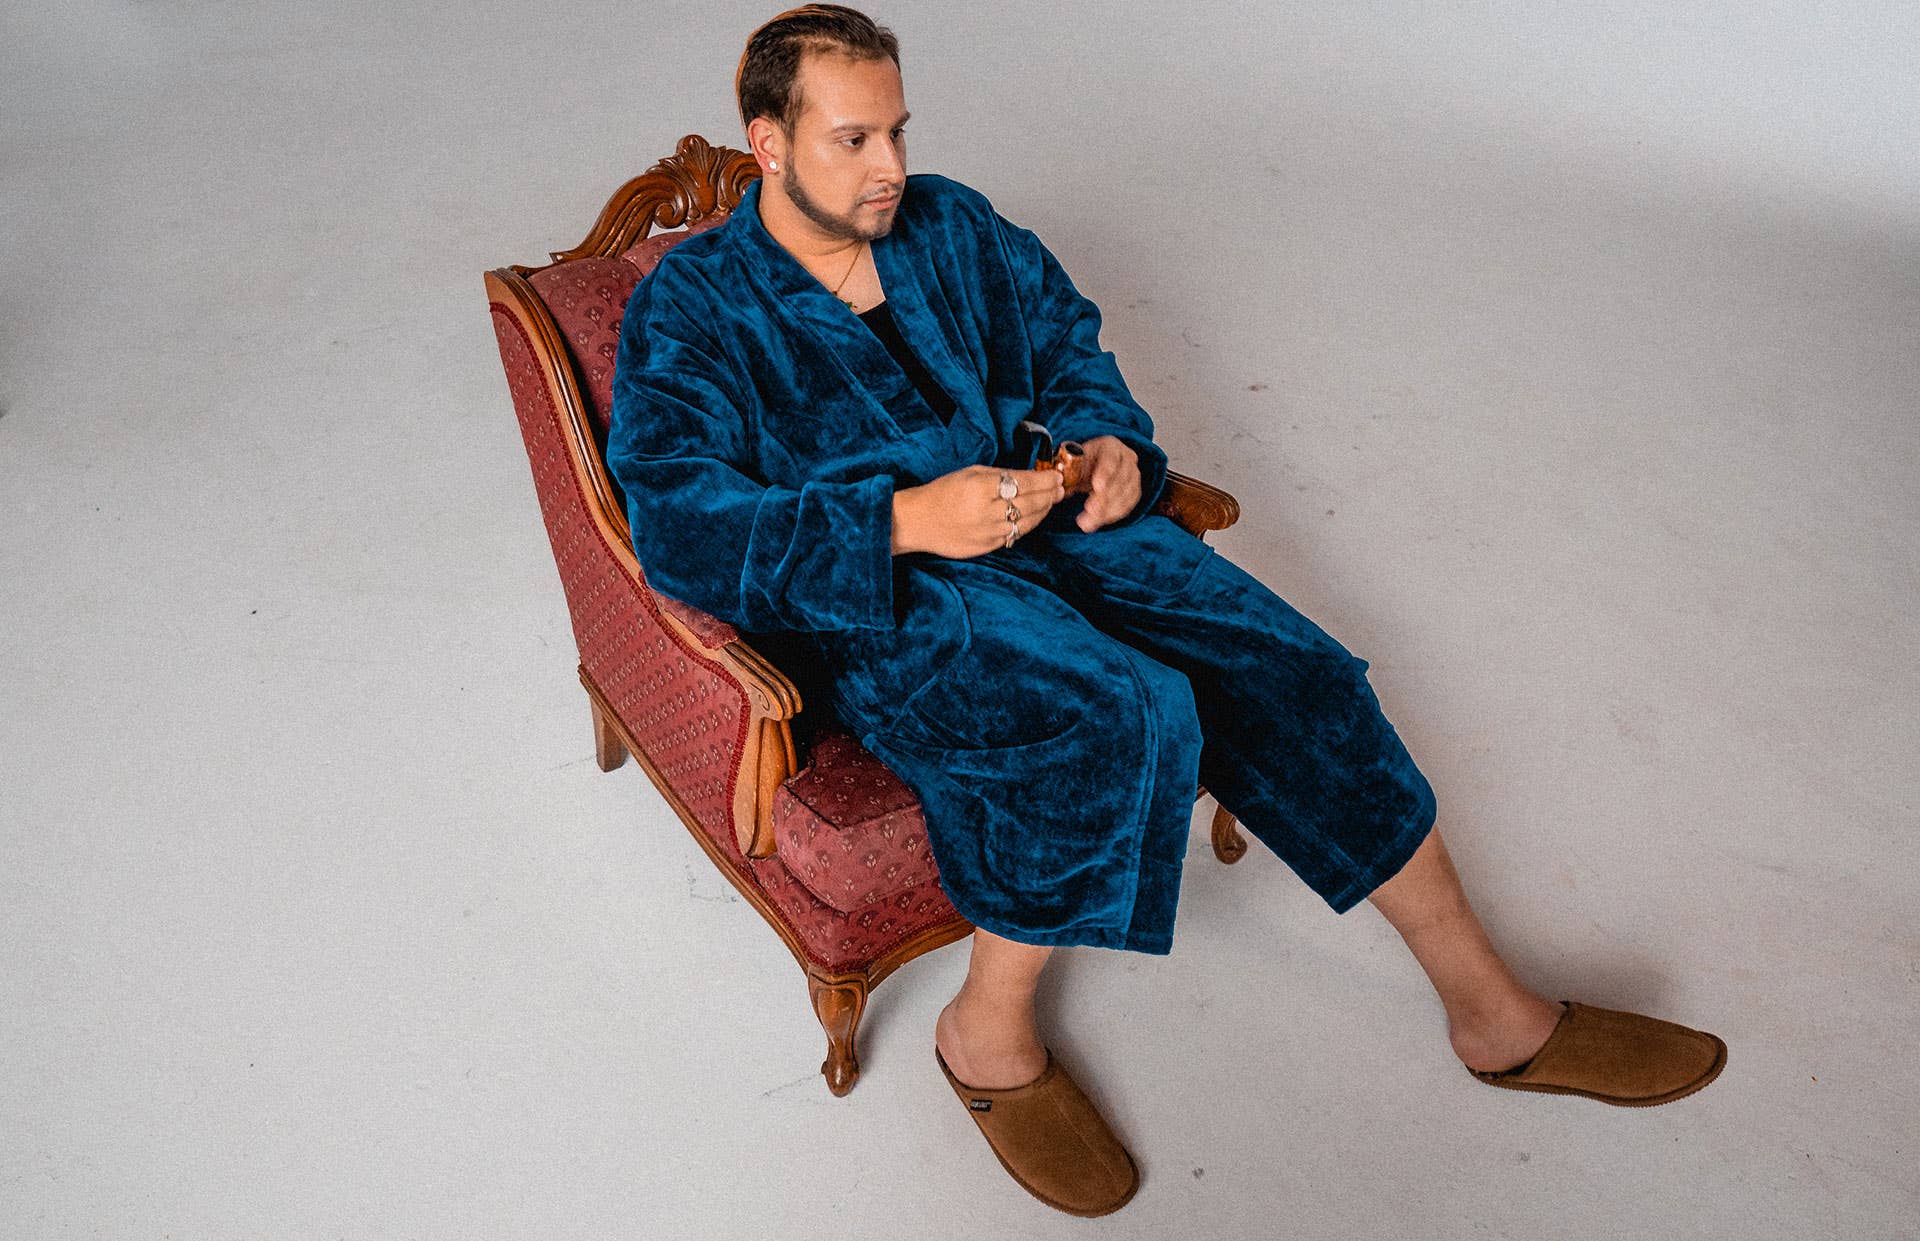 Vancouver rapper Kresnt poses in robe